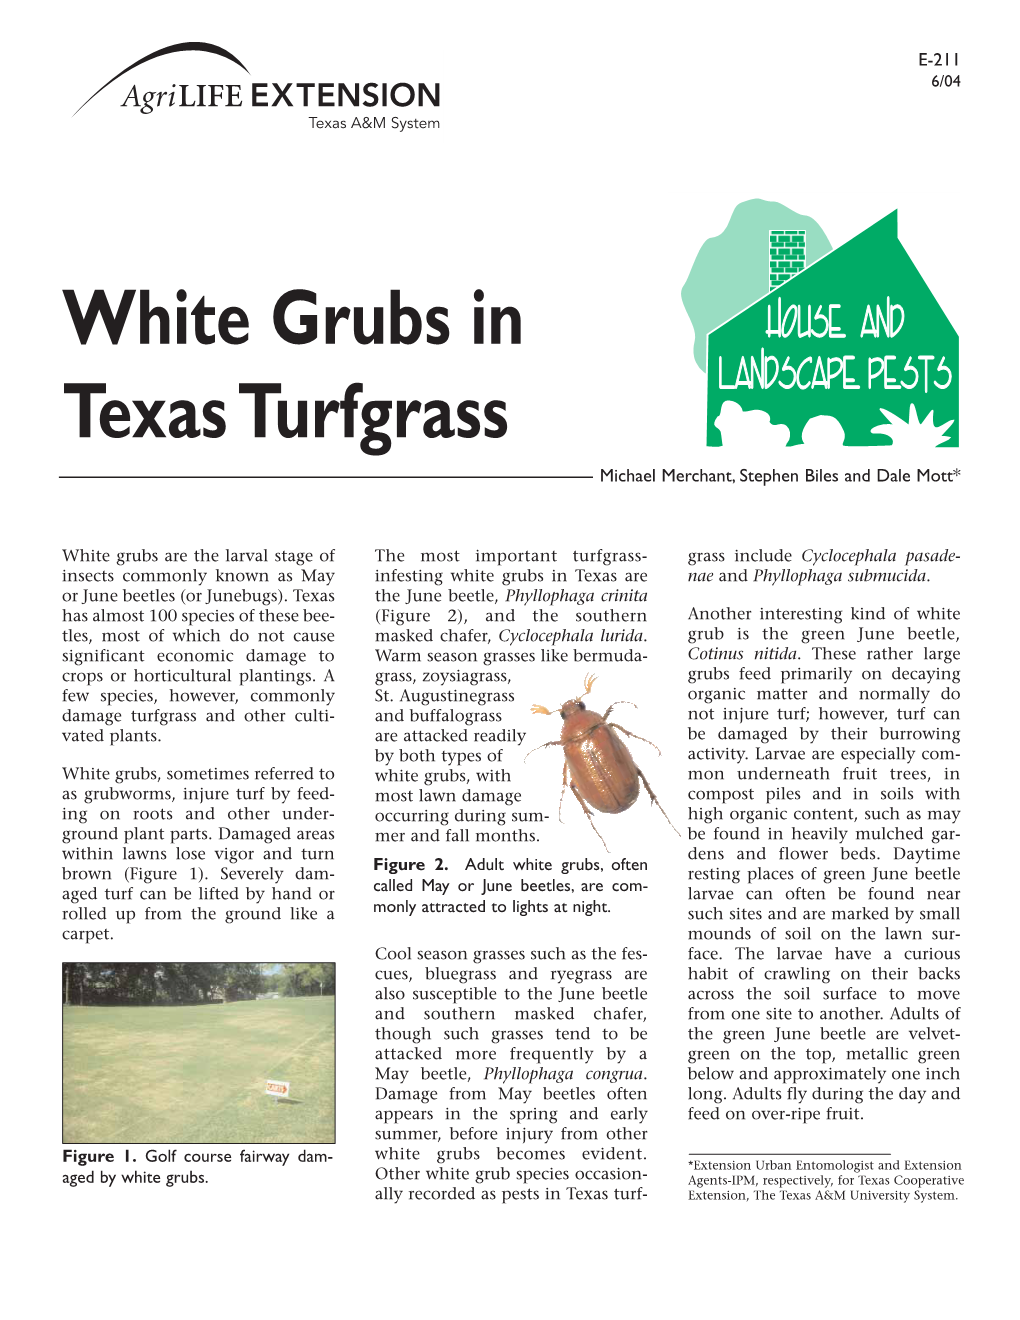 White Grubs in Texas Turfgrass Michael Merchant, Stephen Biles and Dale Mott*